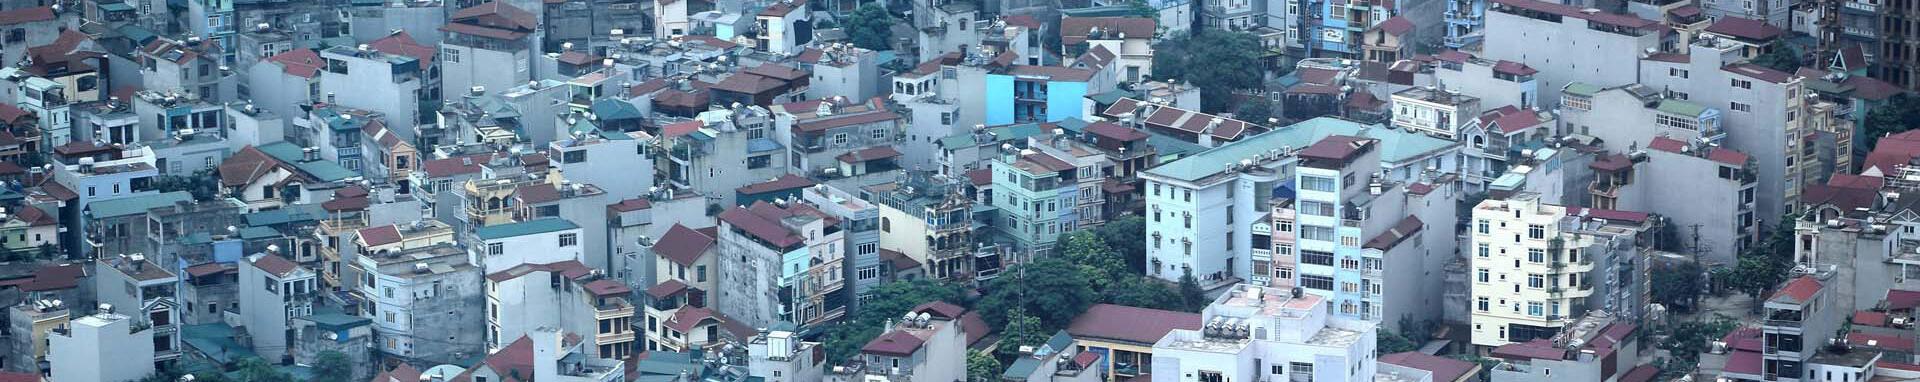 World Bank Photo Collection City view of Hanoi, Vietnam, 2014. Photo Dominic Chavez/World Bank